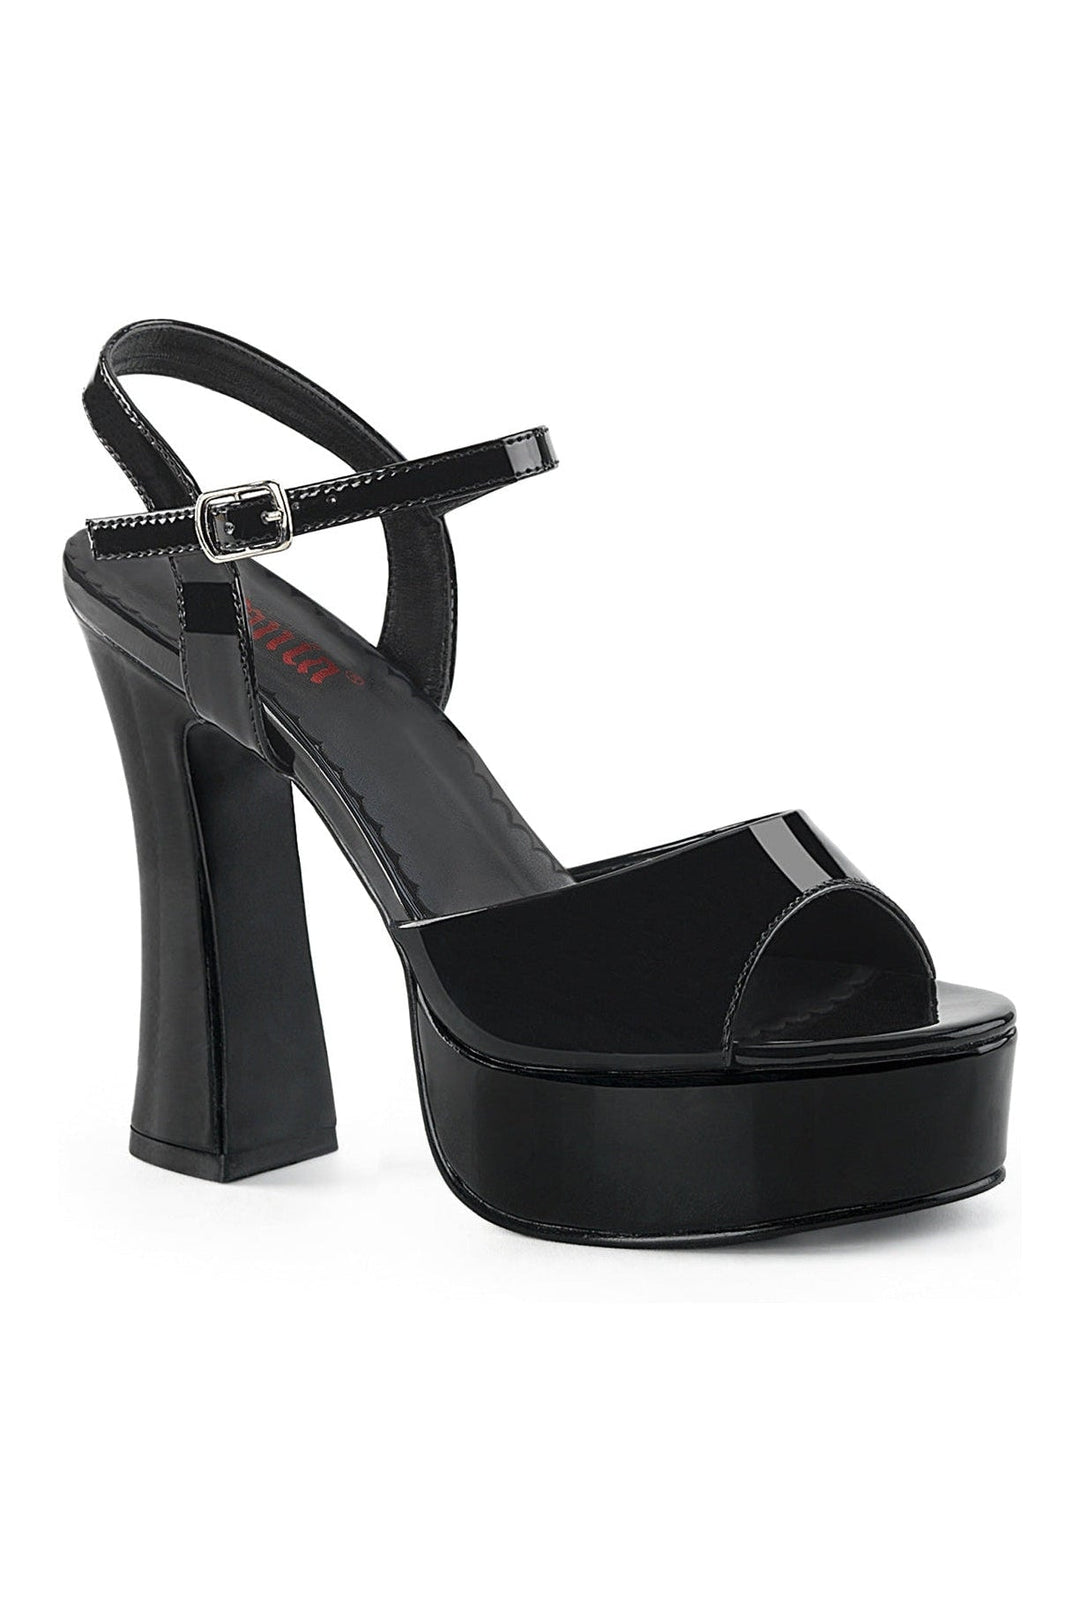 DOLLY-09 Black Patent Sandal